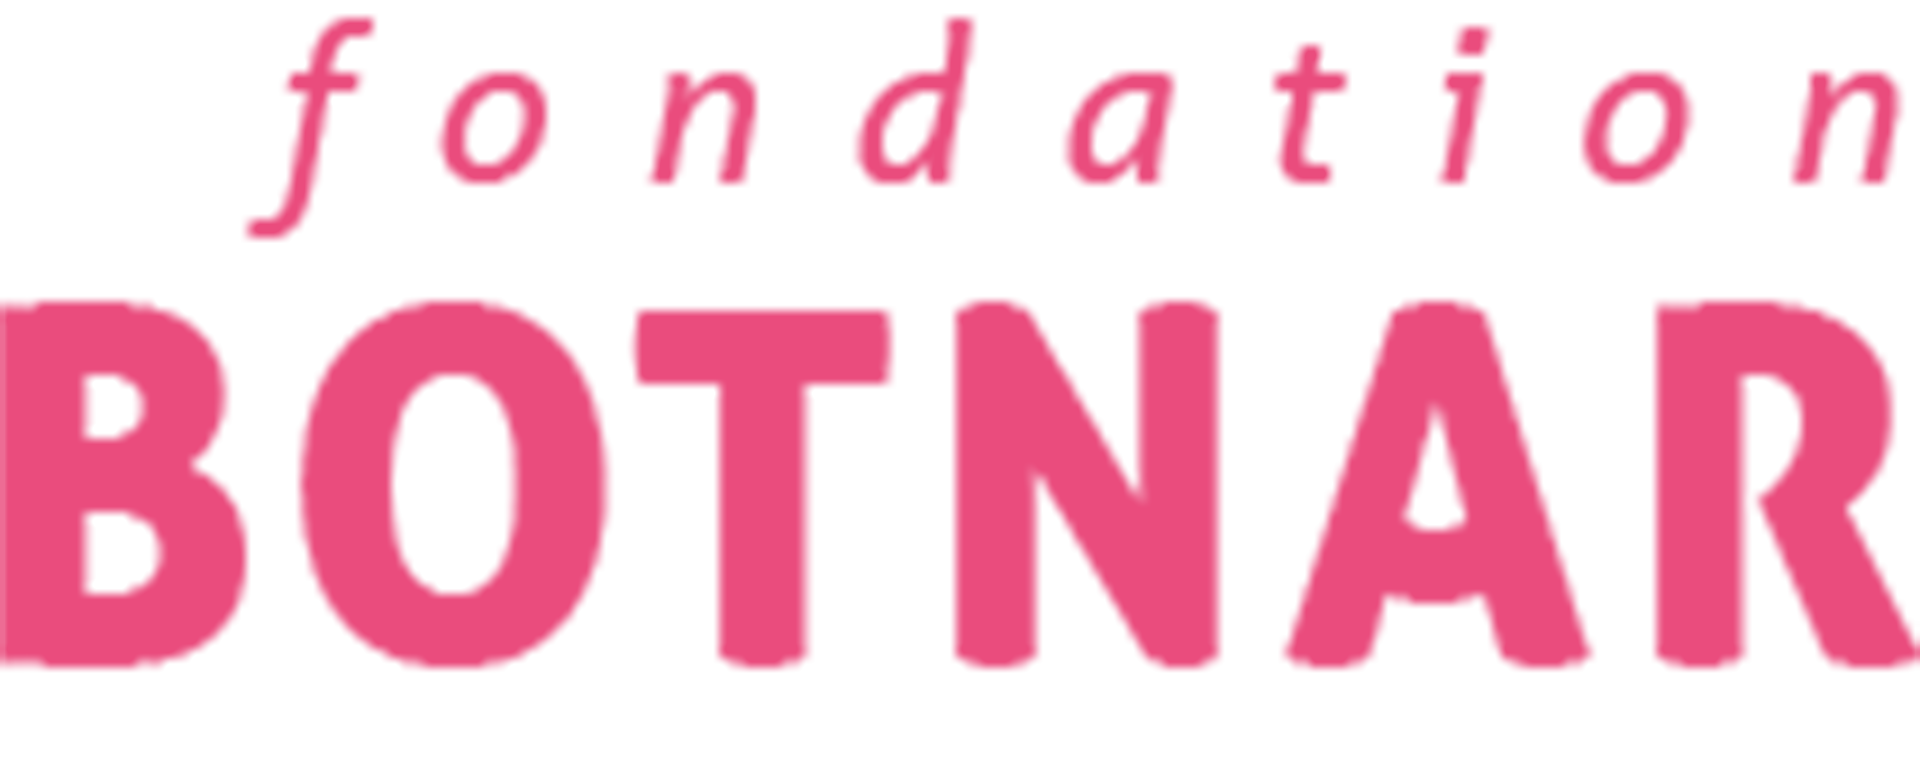 Fondation Botnar